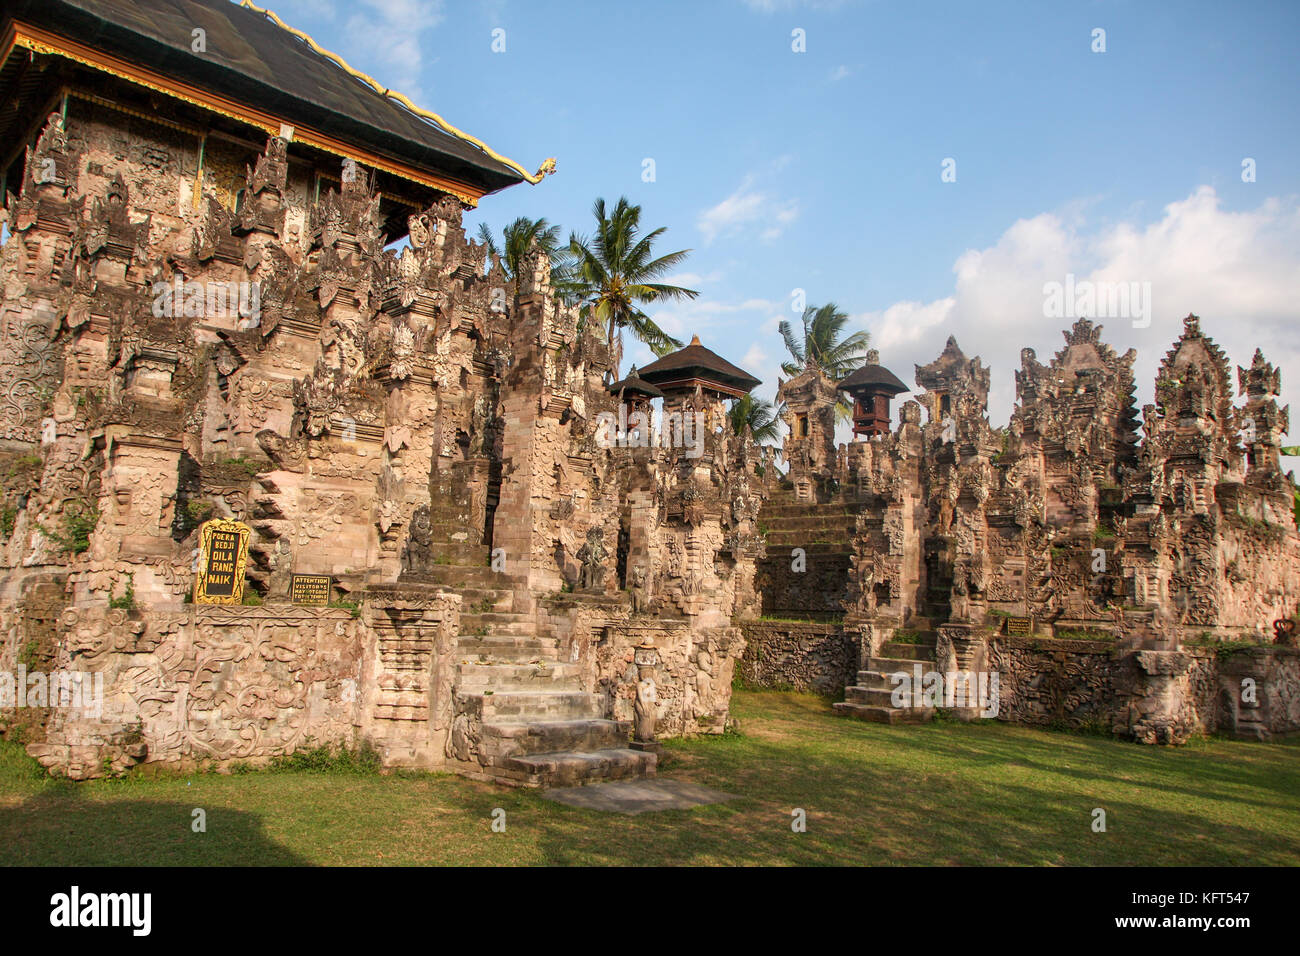 Indonesian temple - Bali - Indonesia Stock Photo